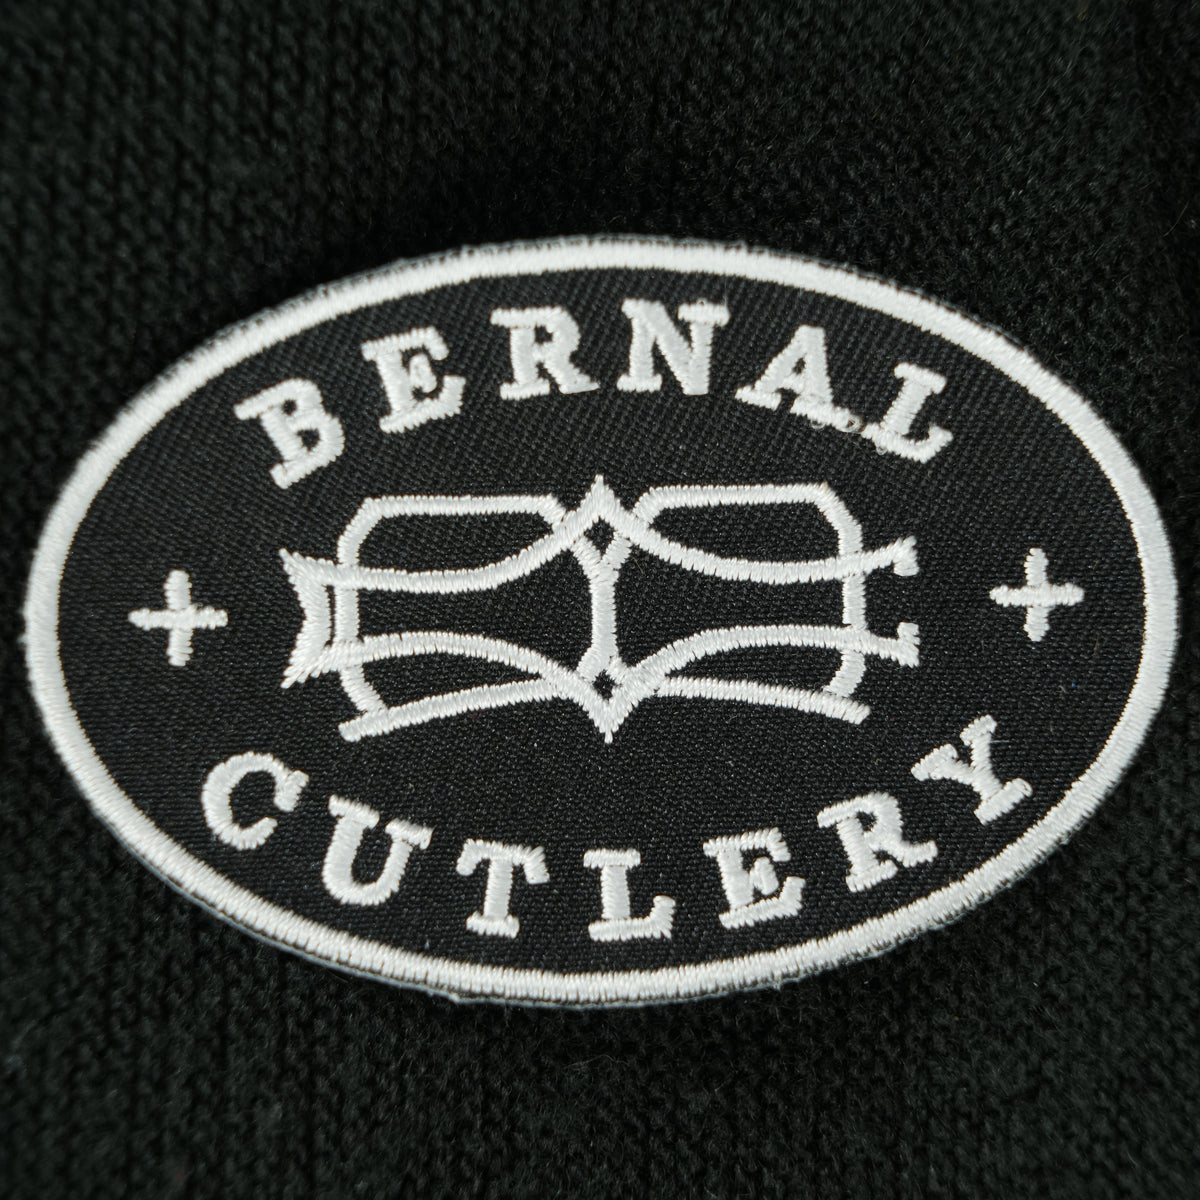 Bernal Cutlery Patch